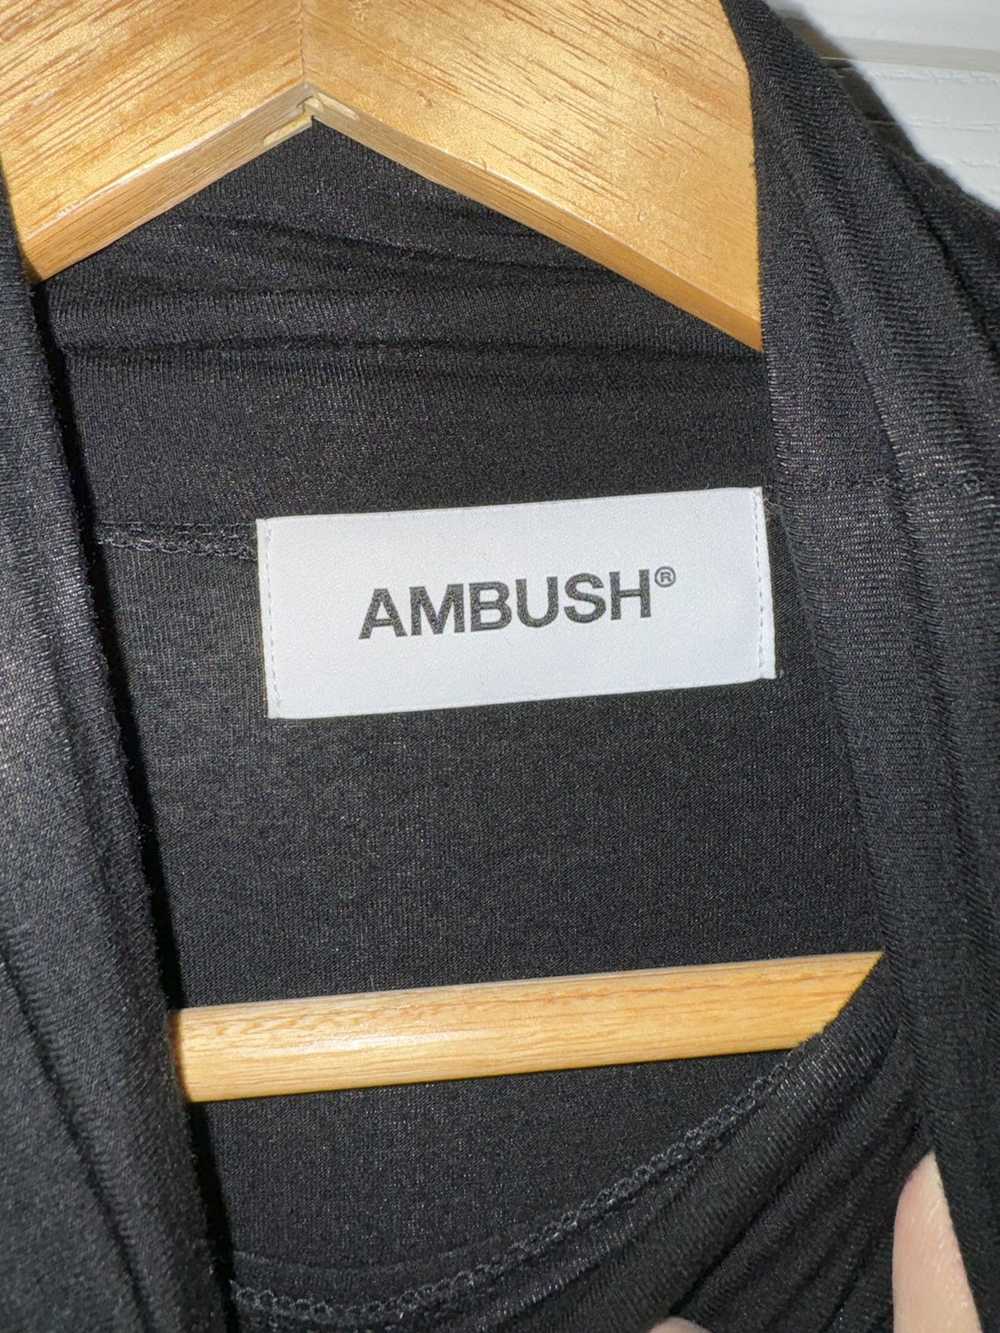 Ambush Design Men’s Ambush Black Turtleneck - image 3